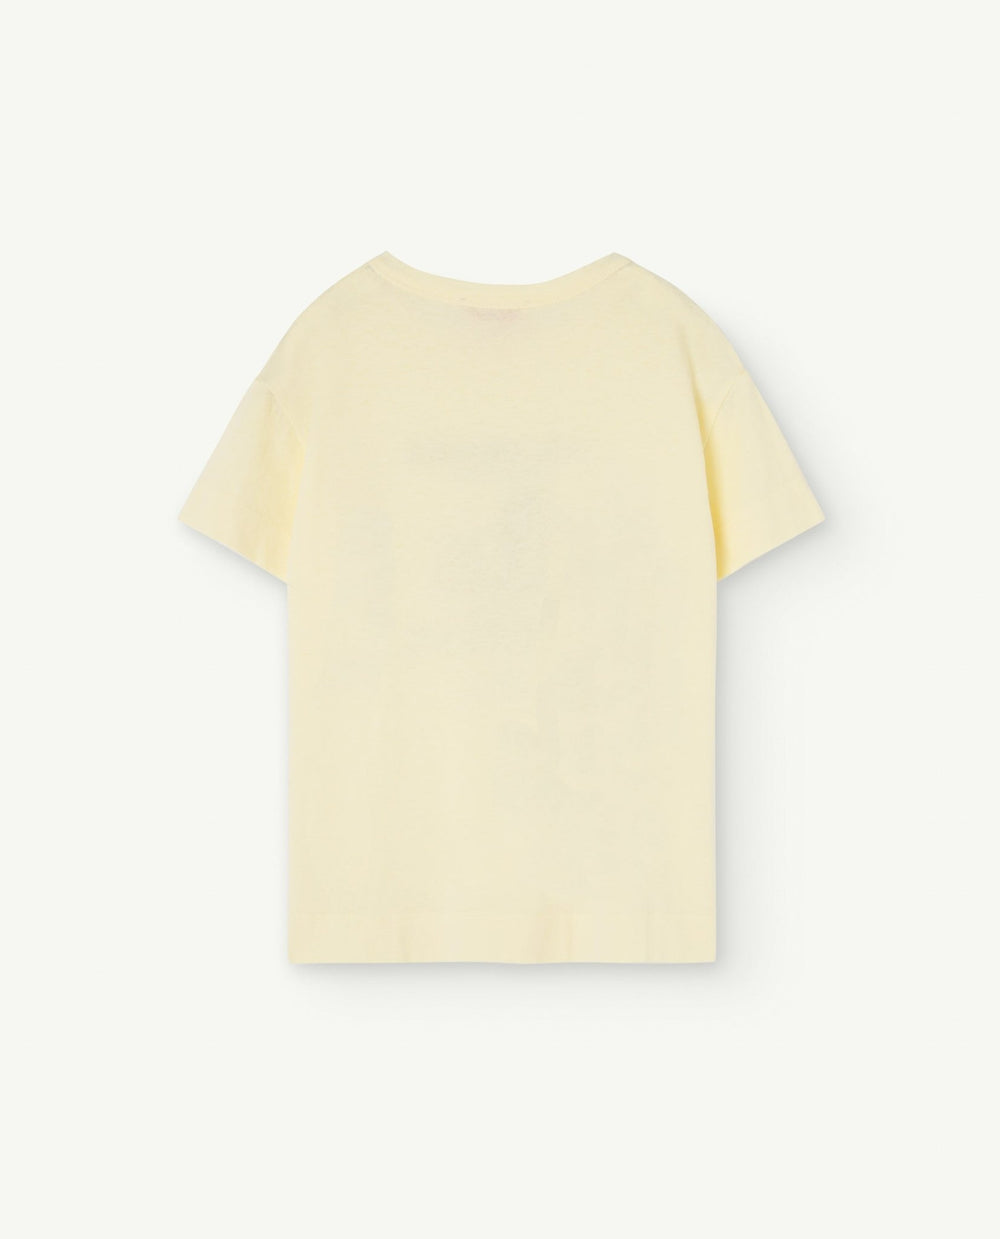 Rooster T-Shirt - Sft Yellow - Posh New York